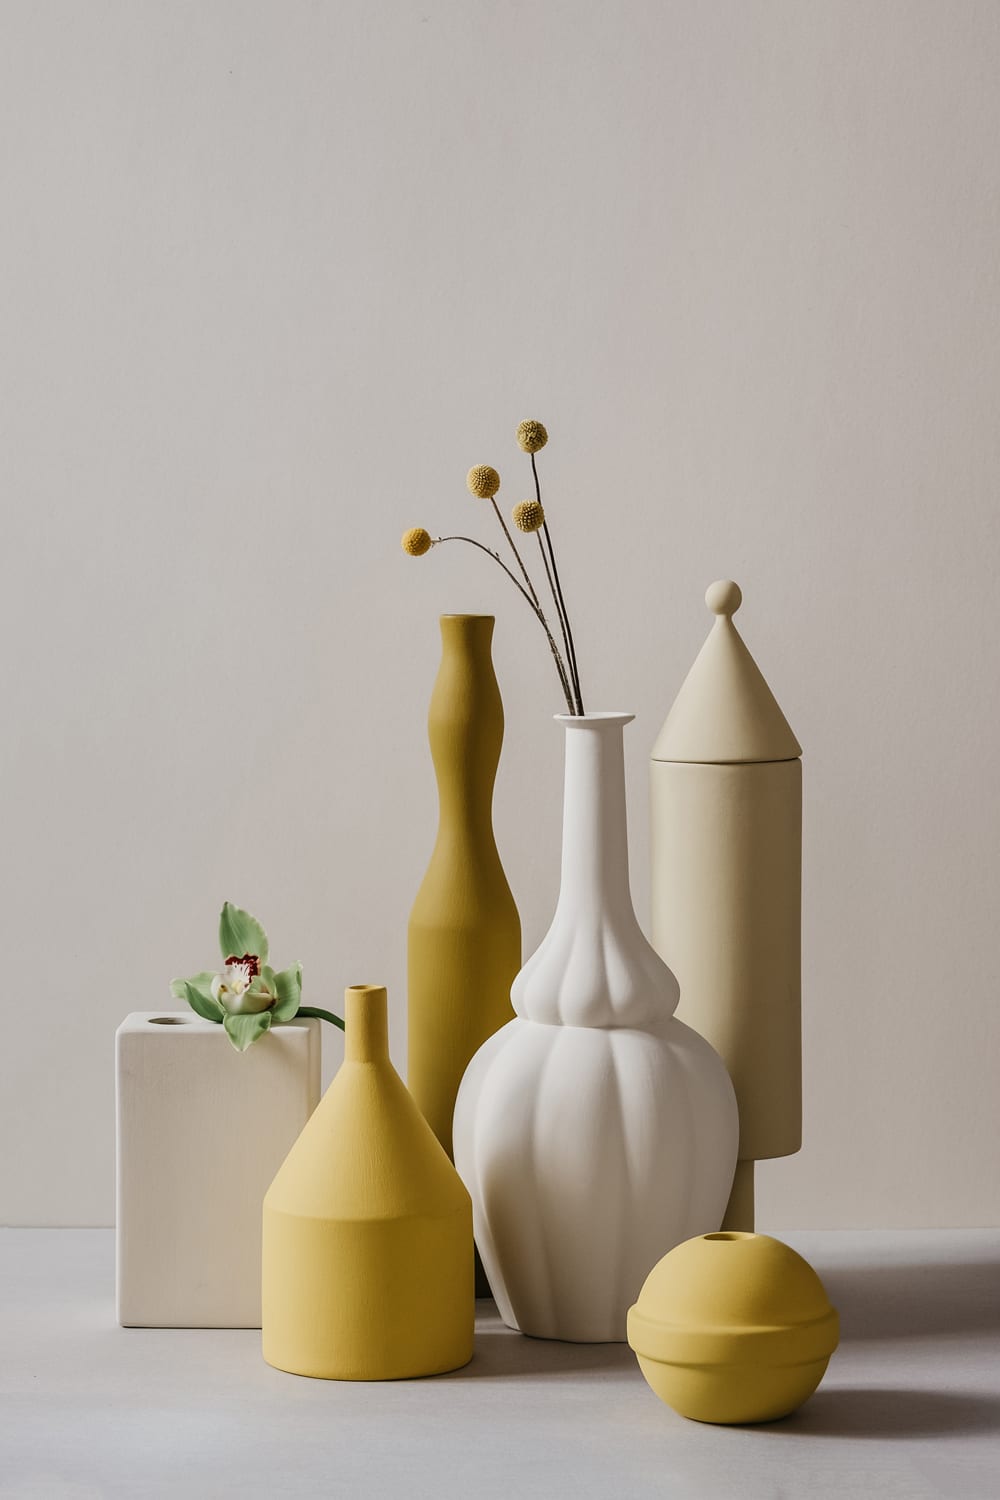 Clay Vase in Contemporary Colors